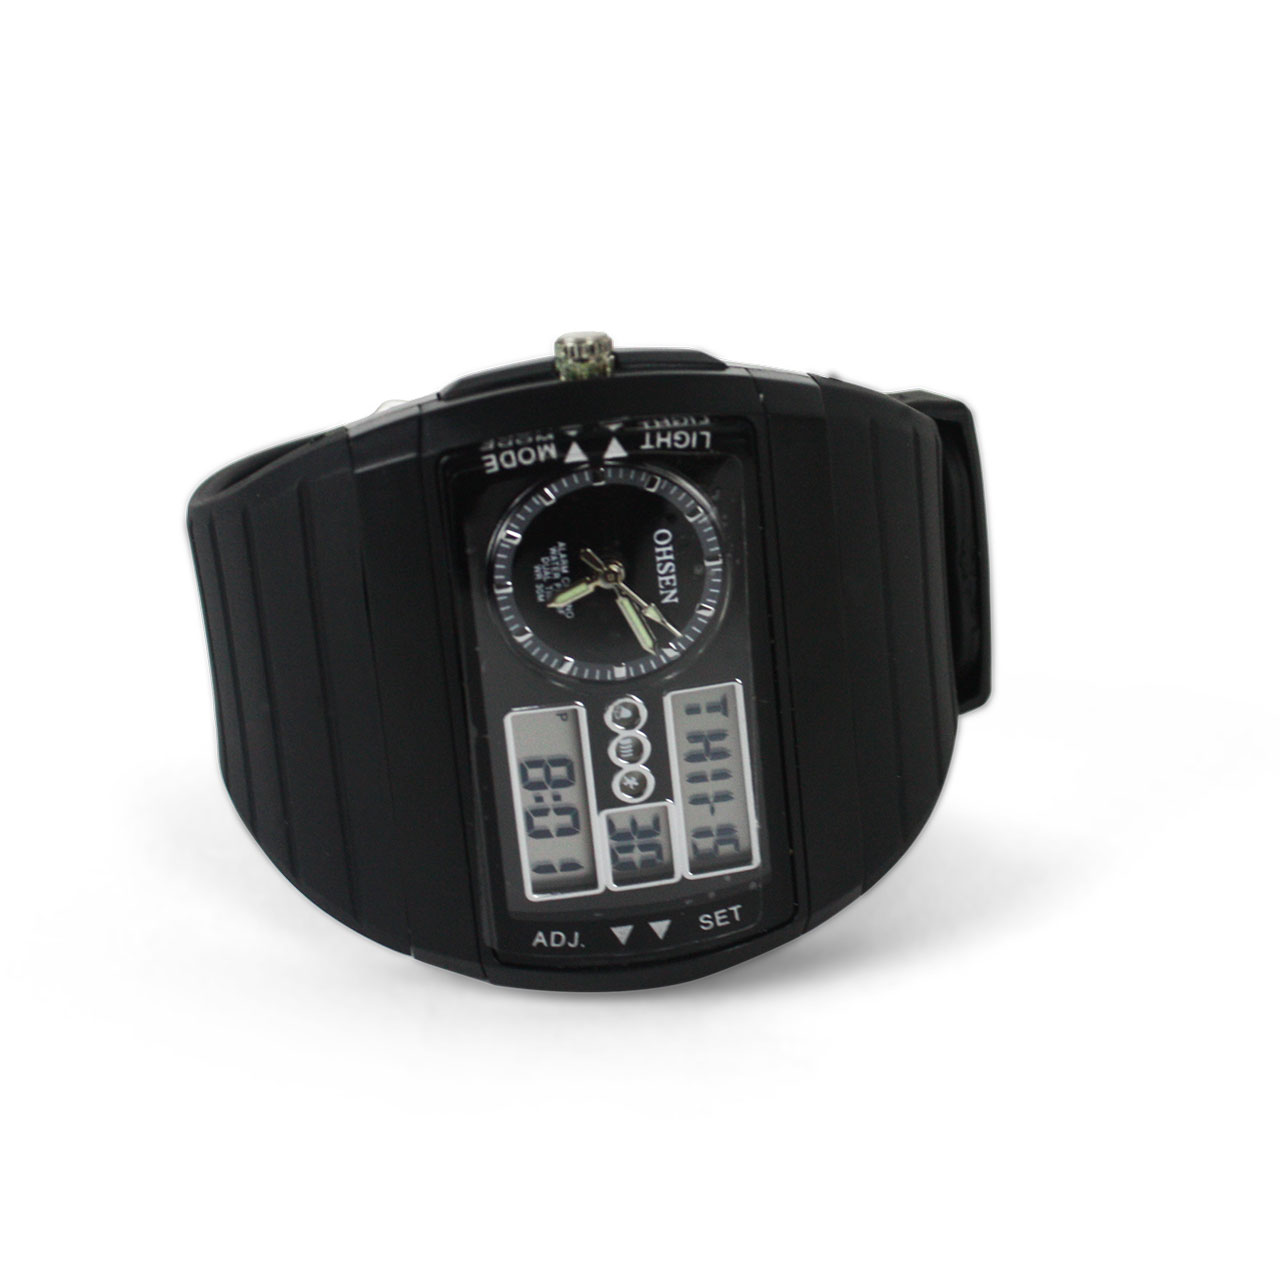 OHSEN Analog Digital Water Resistant Quartz LED 12/24Hrs Sport Rubber Wristwatch